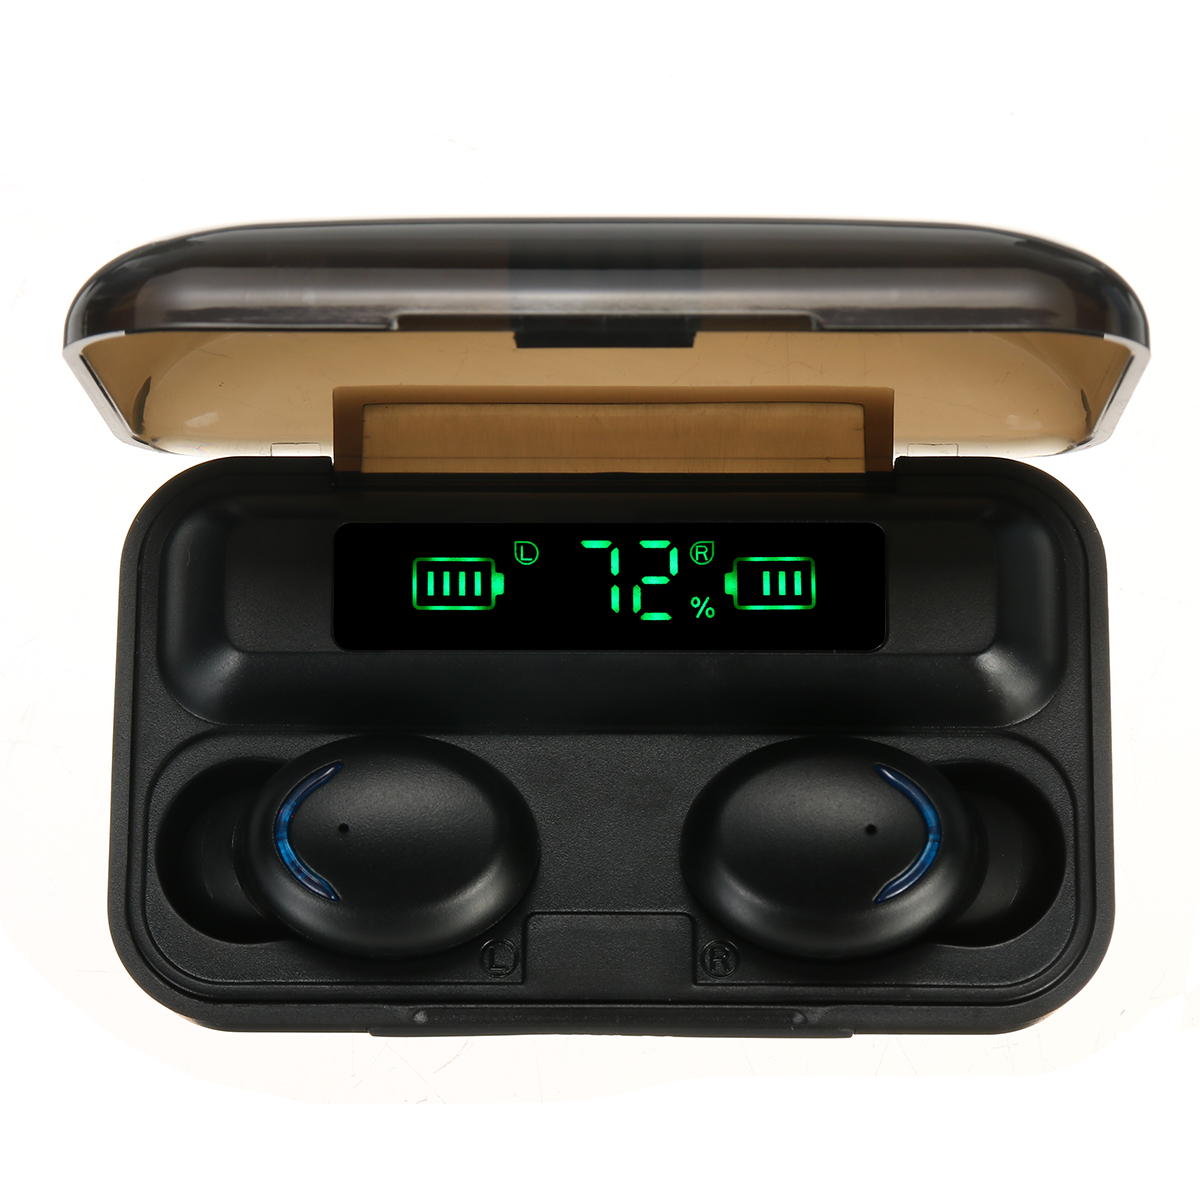 TWS bluetooth 5.0 Earphone Smart Touch 4500mAh Power Bank Mini Earbuds IPX7 Waterproof Headphone with Mic